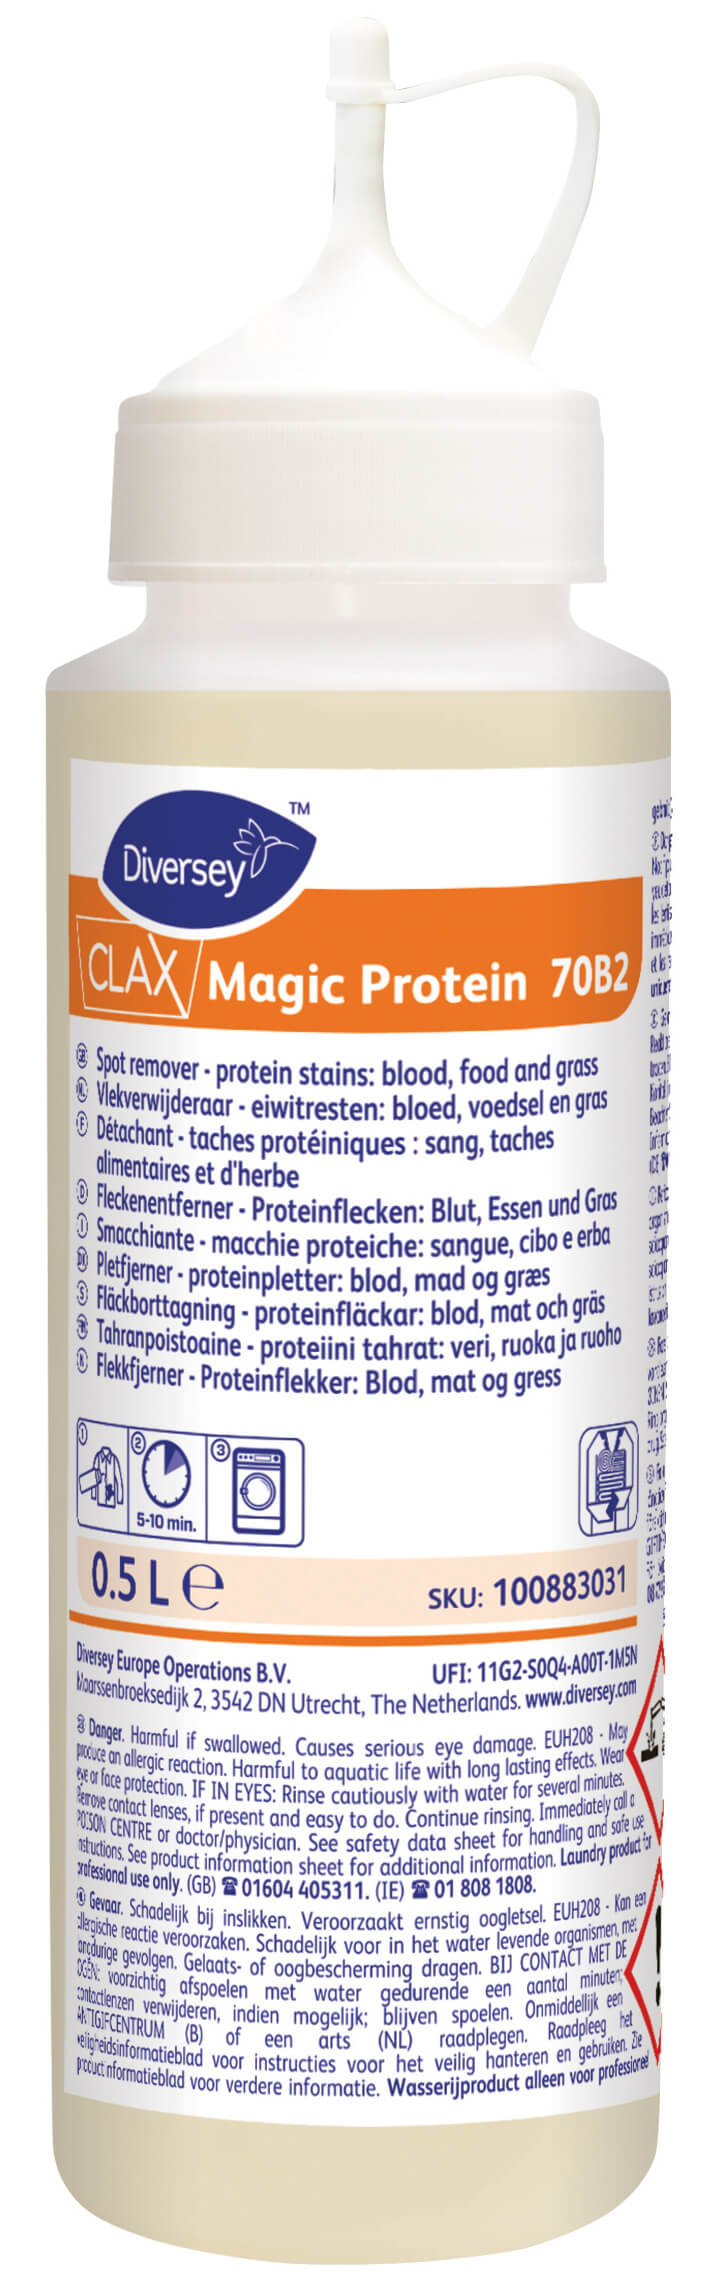 Clax Magic Protein 70B2